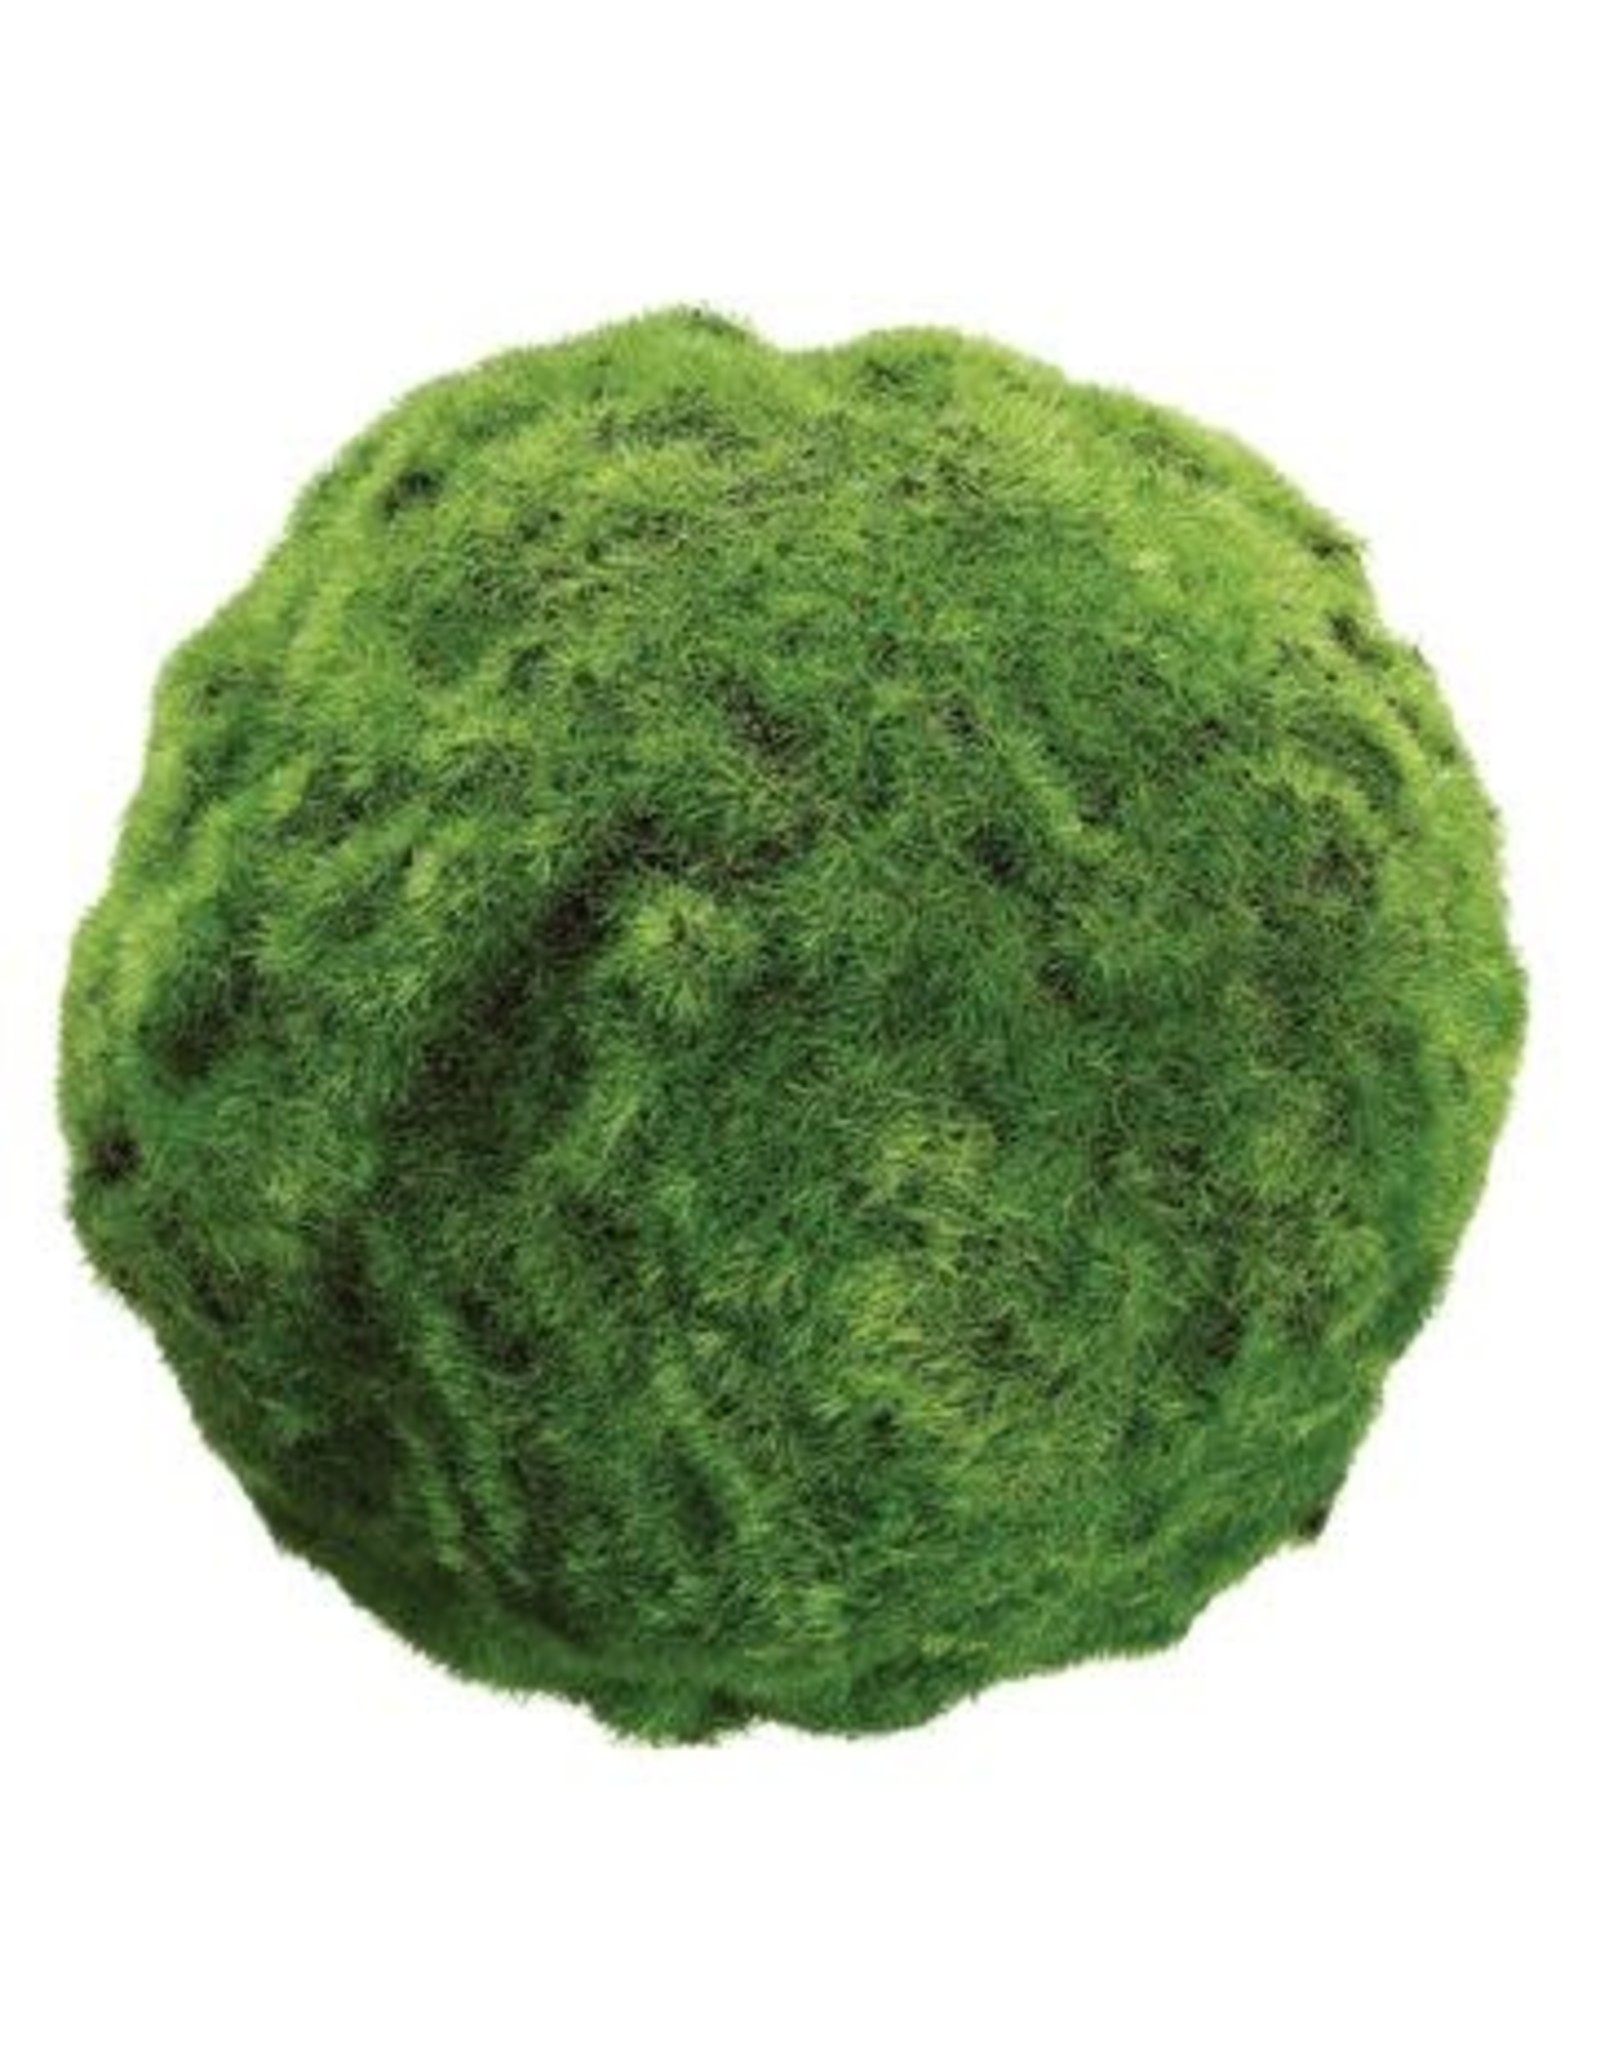 AA1111  7" Moss Ball